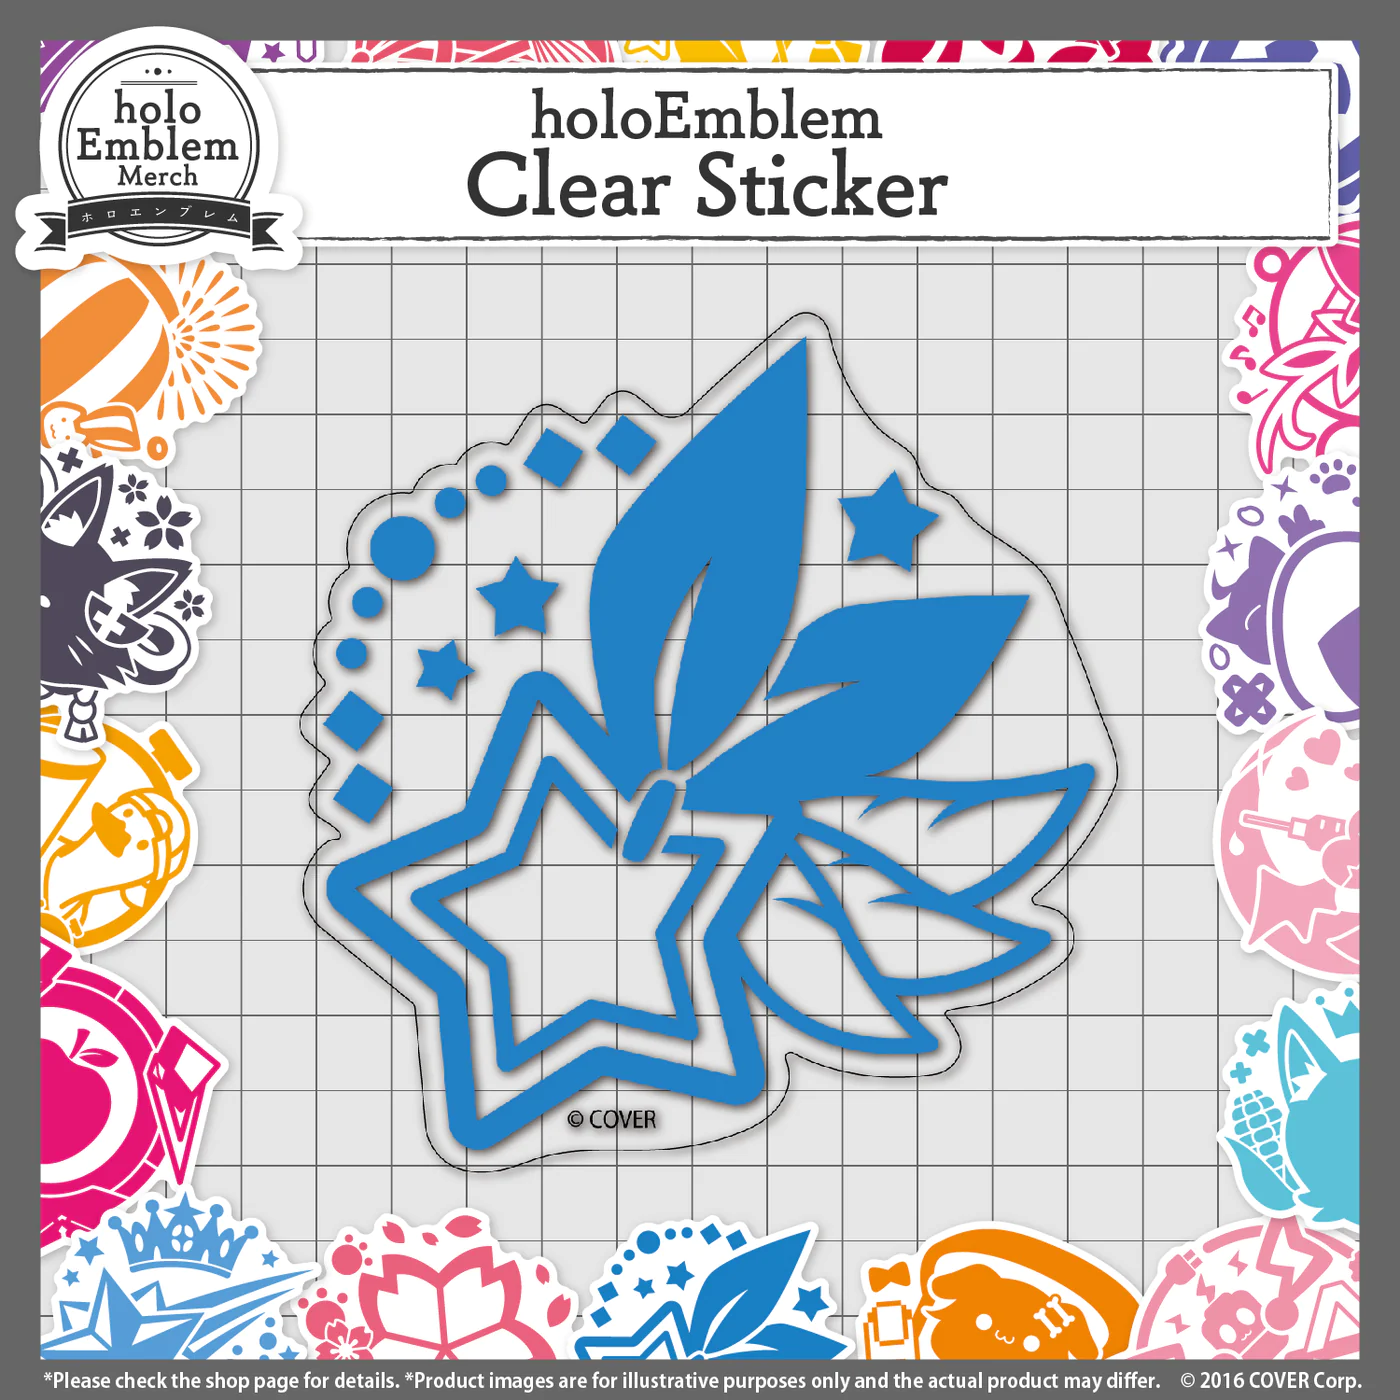 [Pre-order] holoEmblem Clear Sticker Gen 3-5, holoX